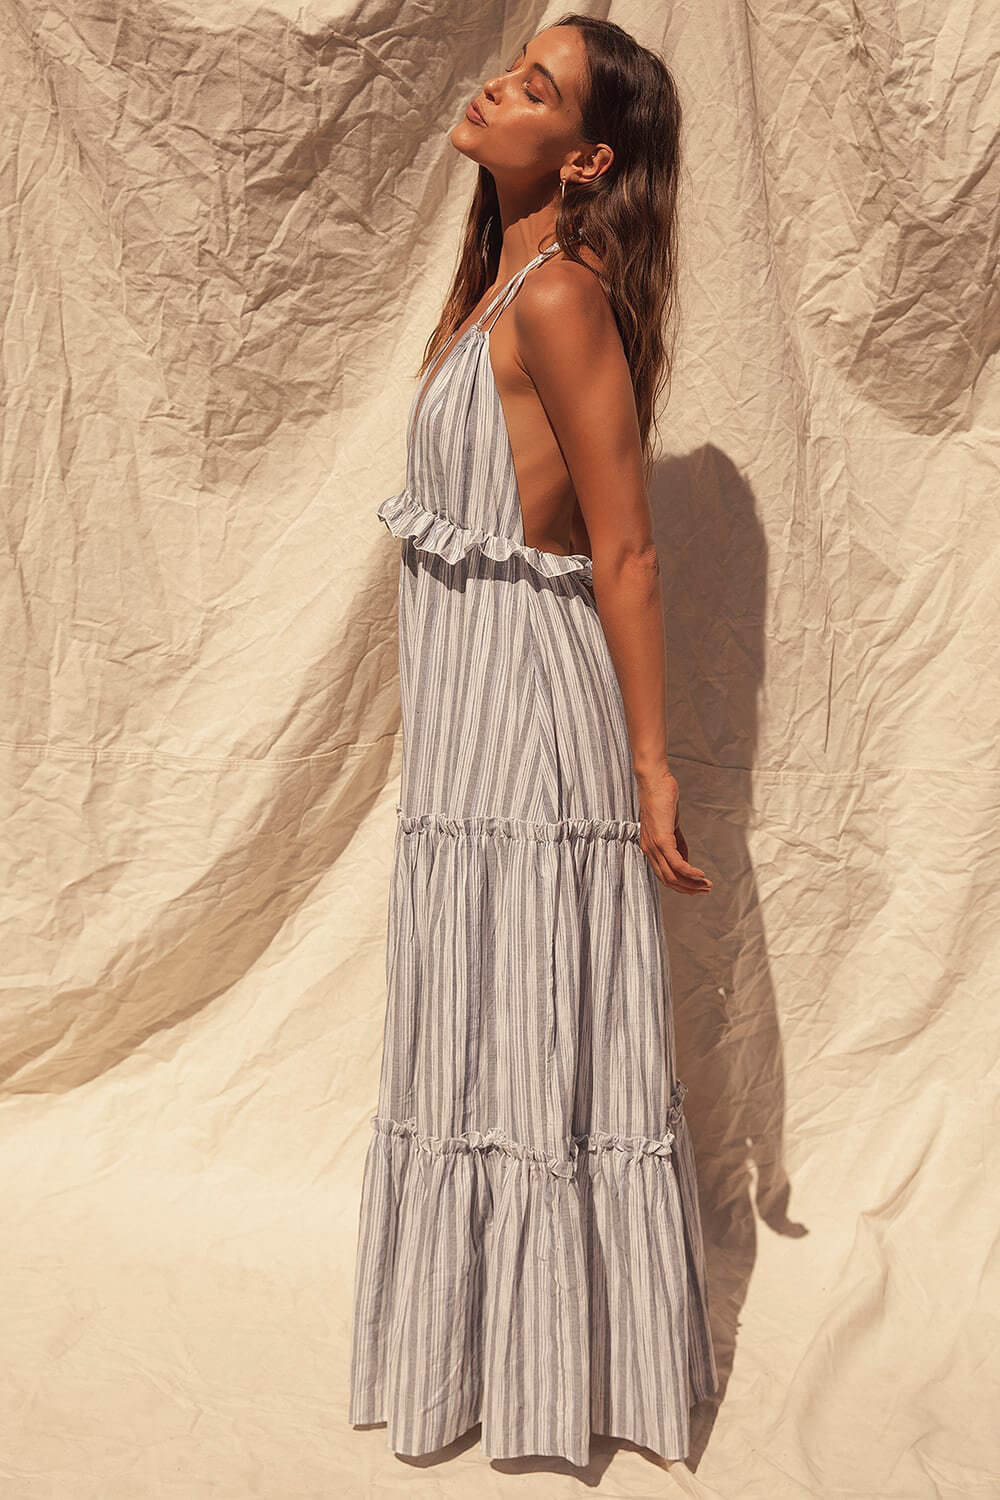 Beach Honeymoon Dresses Cute Beach Outfits Grey Striped Maxi Dress 2